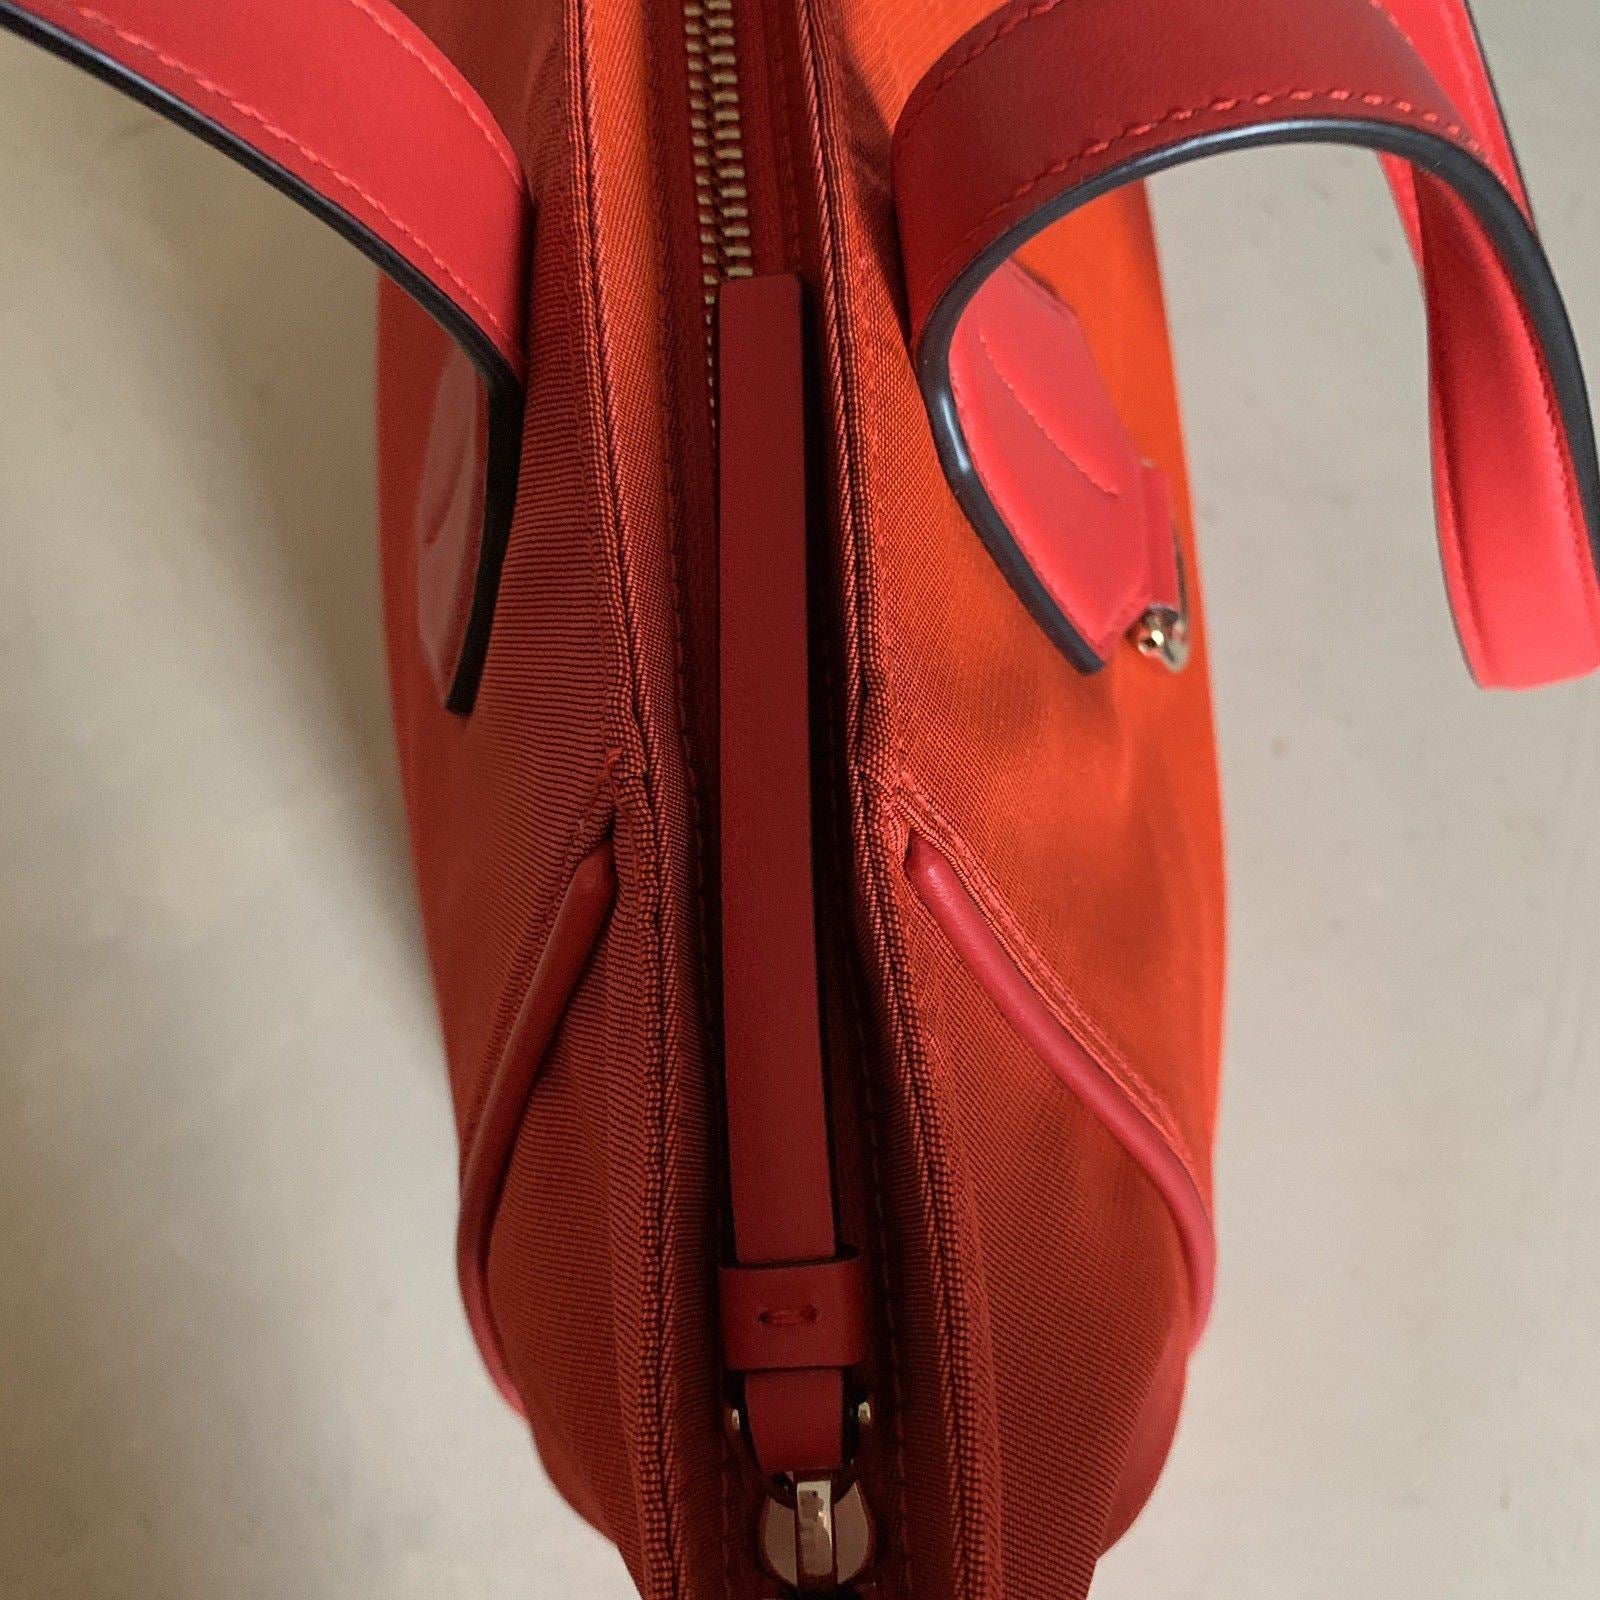 New $542 Bally Calibri Women’s Nylon Leather Handbag Bag Red 6215581 Switza